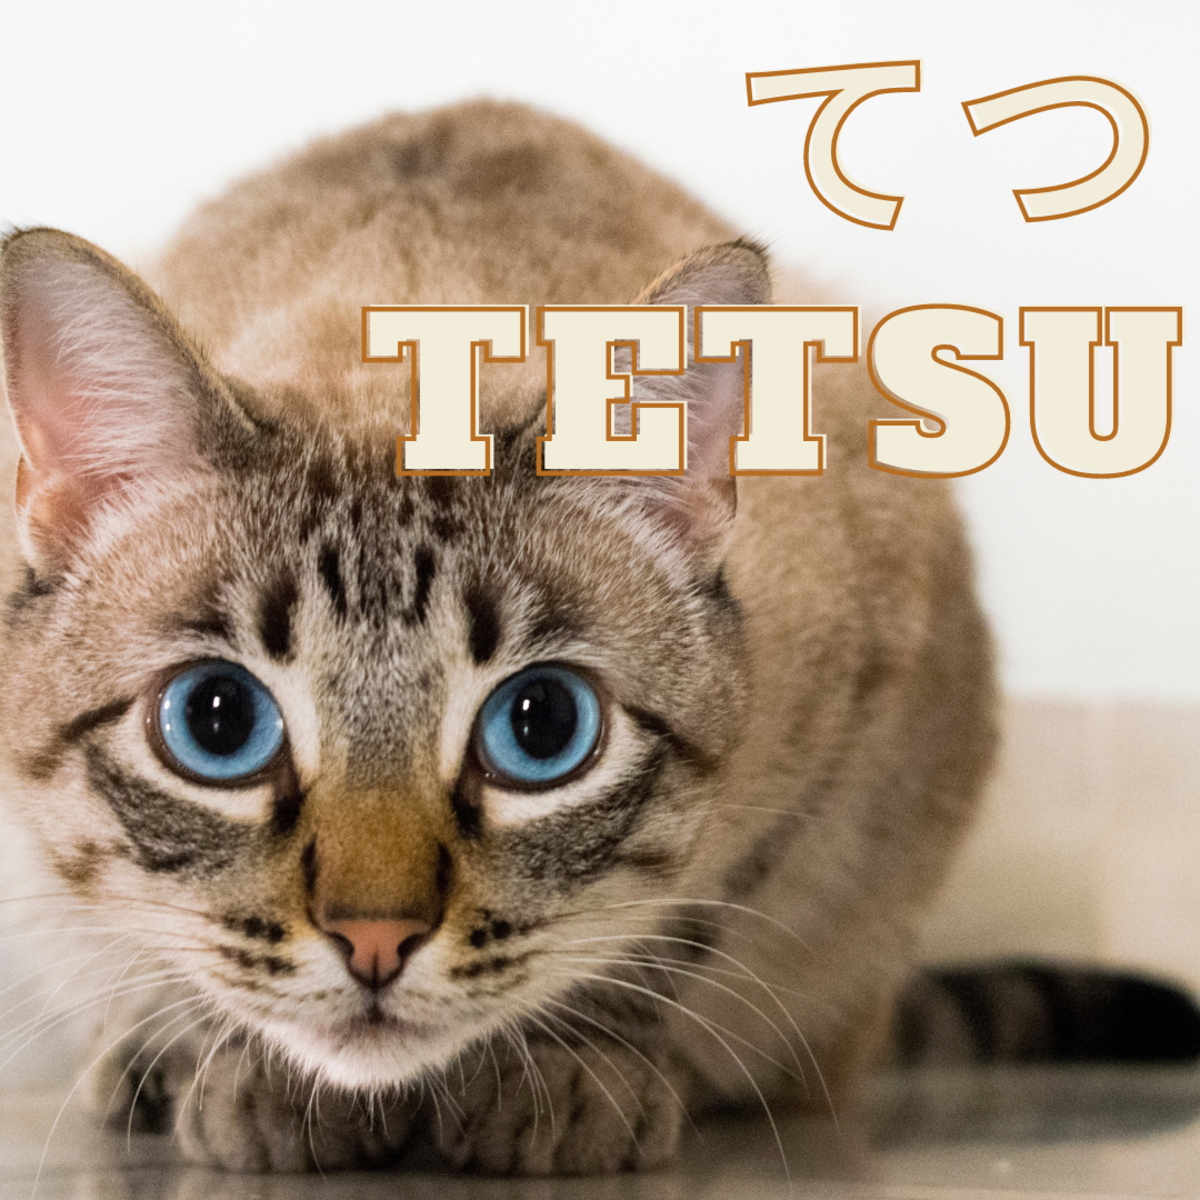 Tetsu or Iron